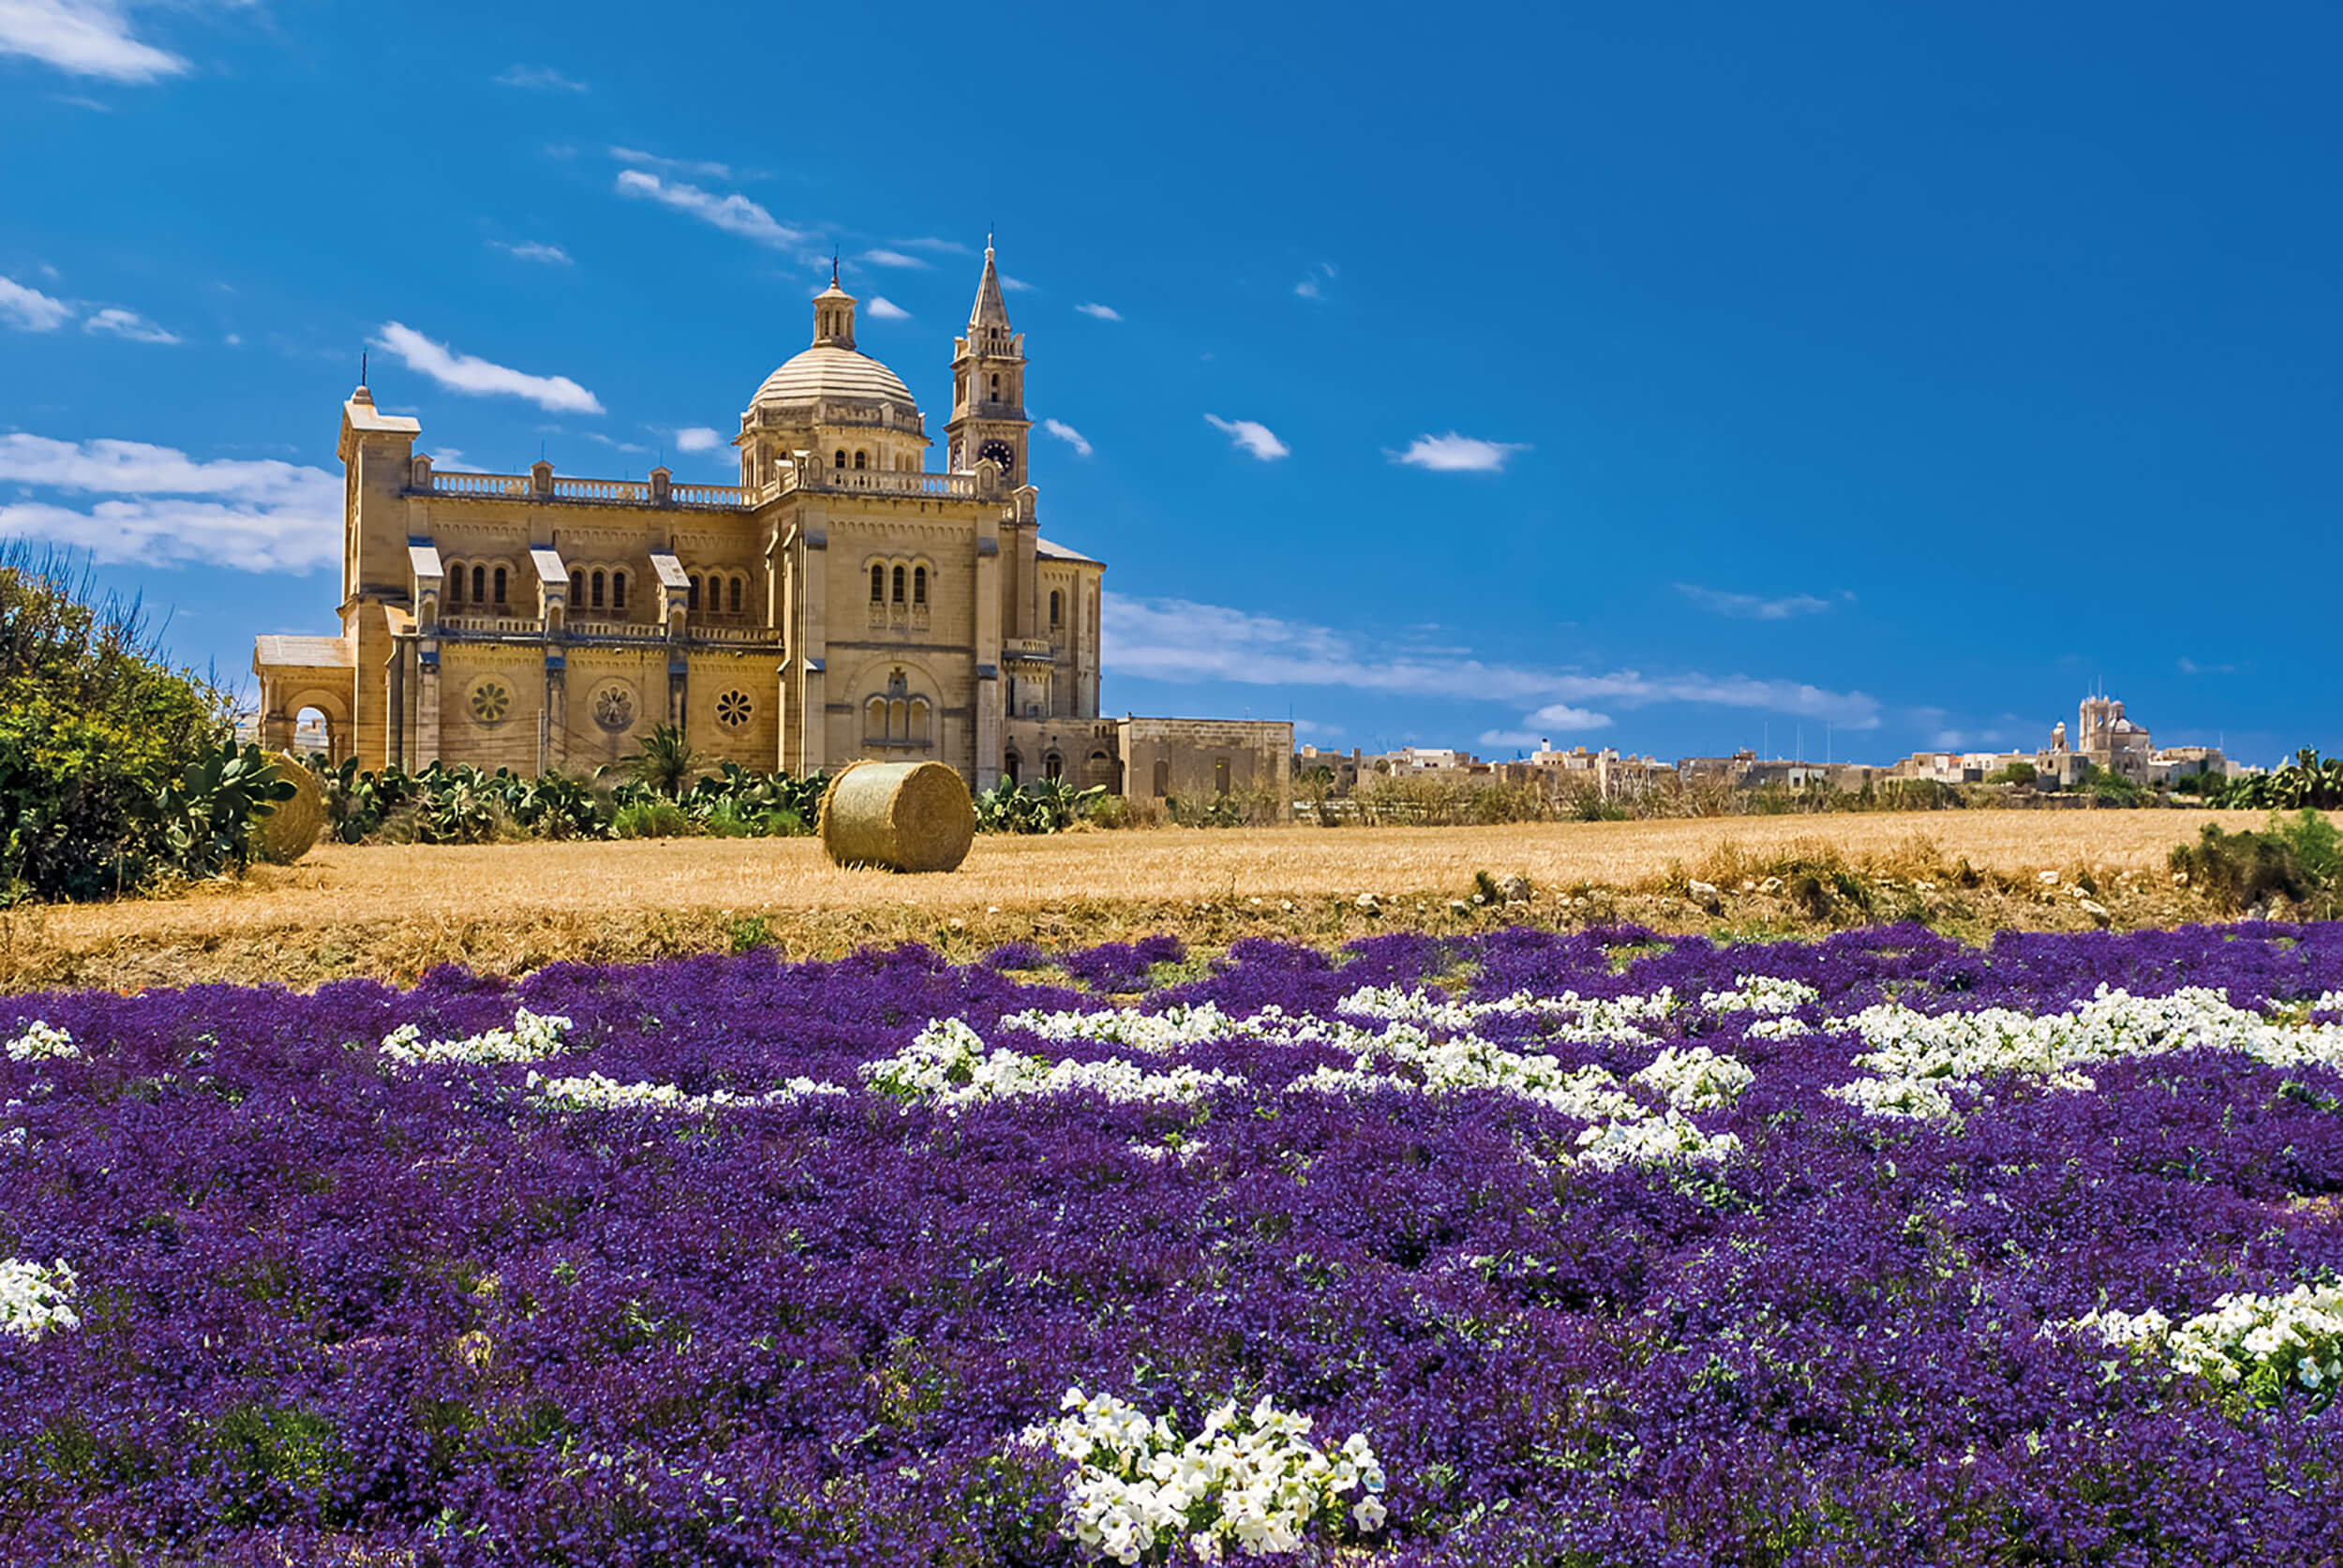 Ta' Pinu National Shrine - Top 10 Attractions on Gozo Island